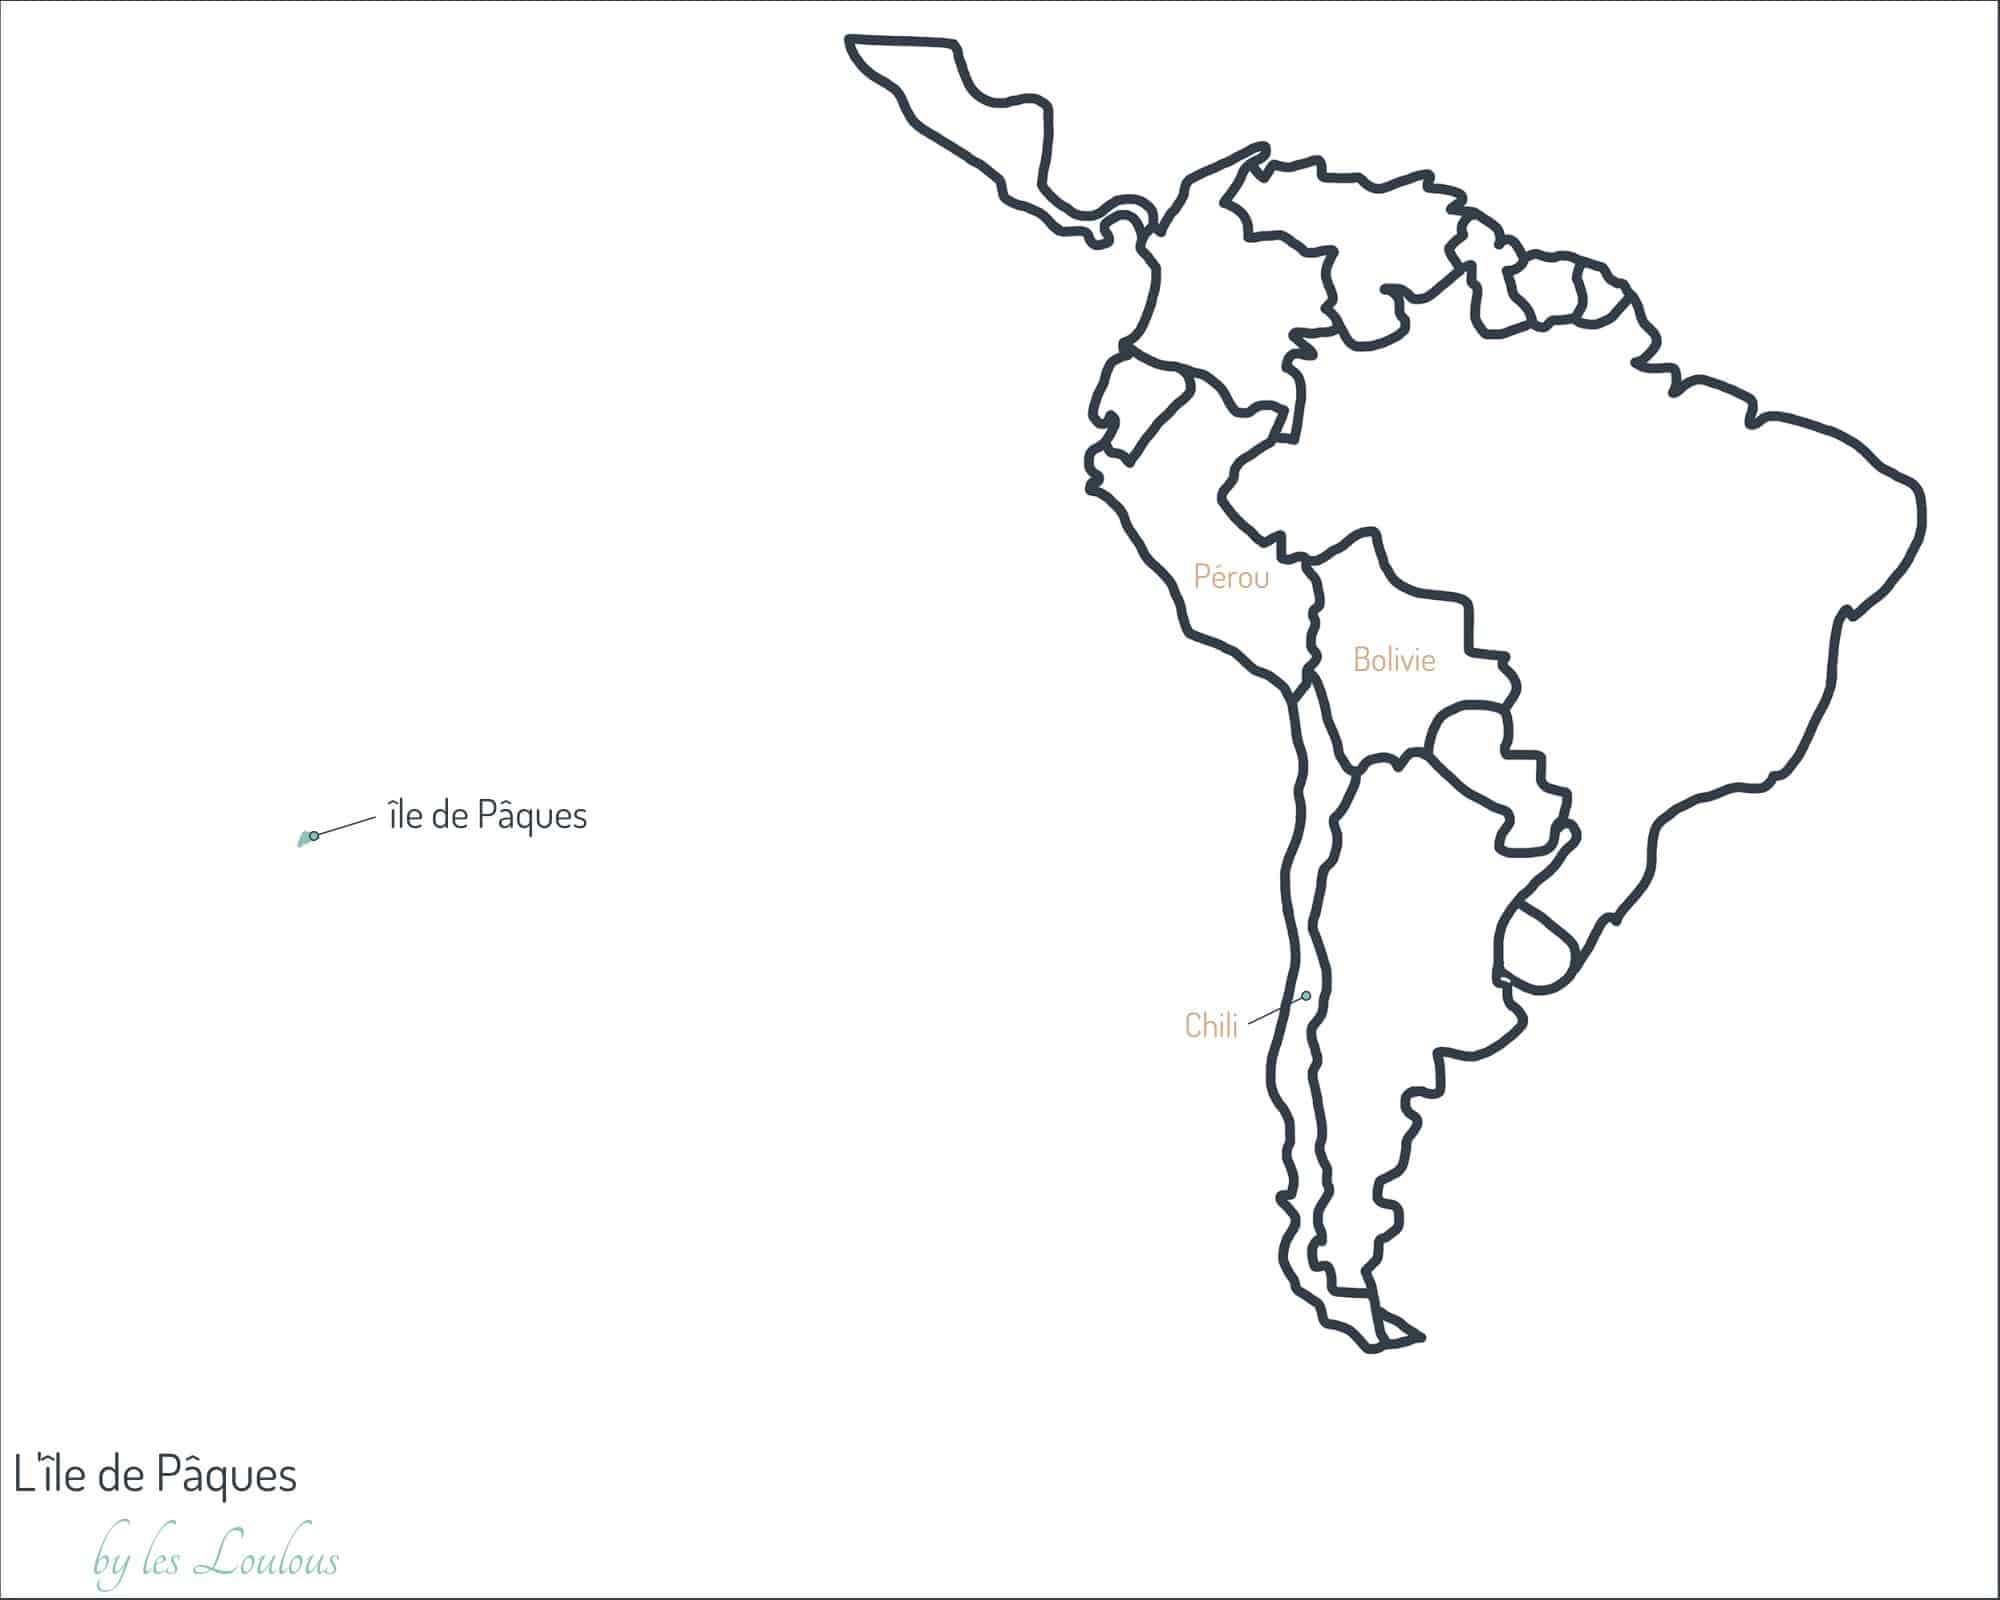 carte ile de paques localisation situer l'ile de paques sur une carte ile de paques quel continent